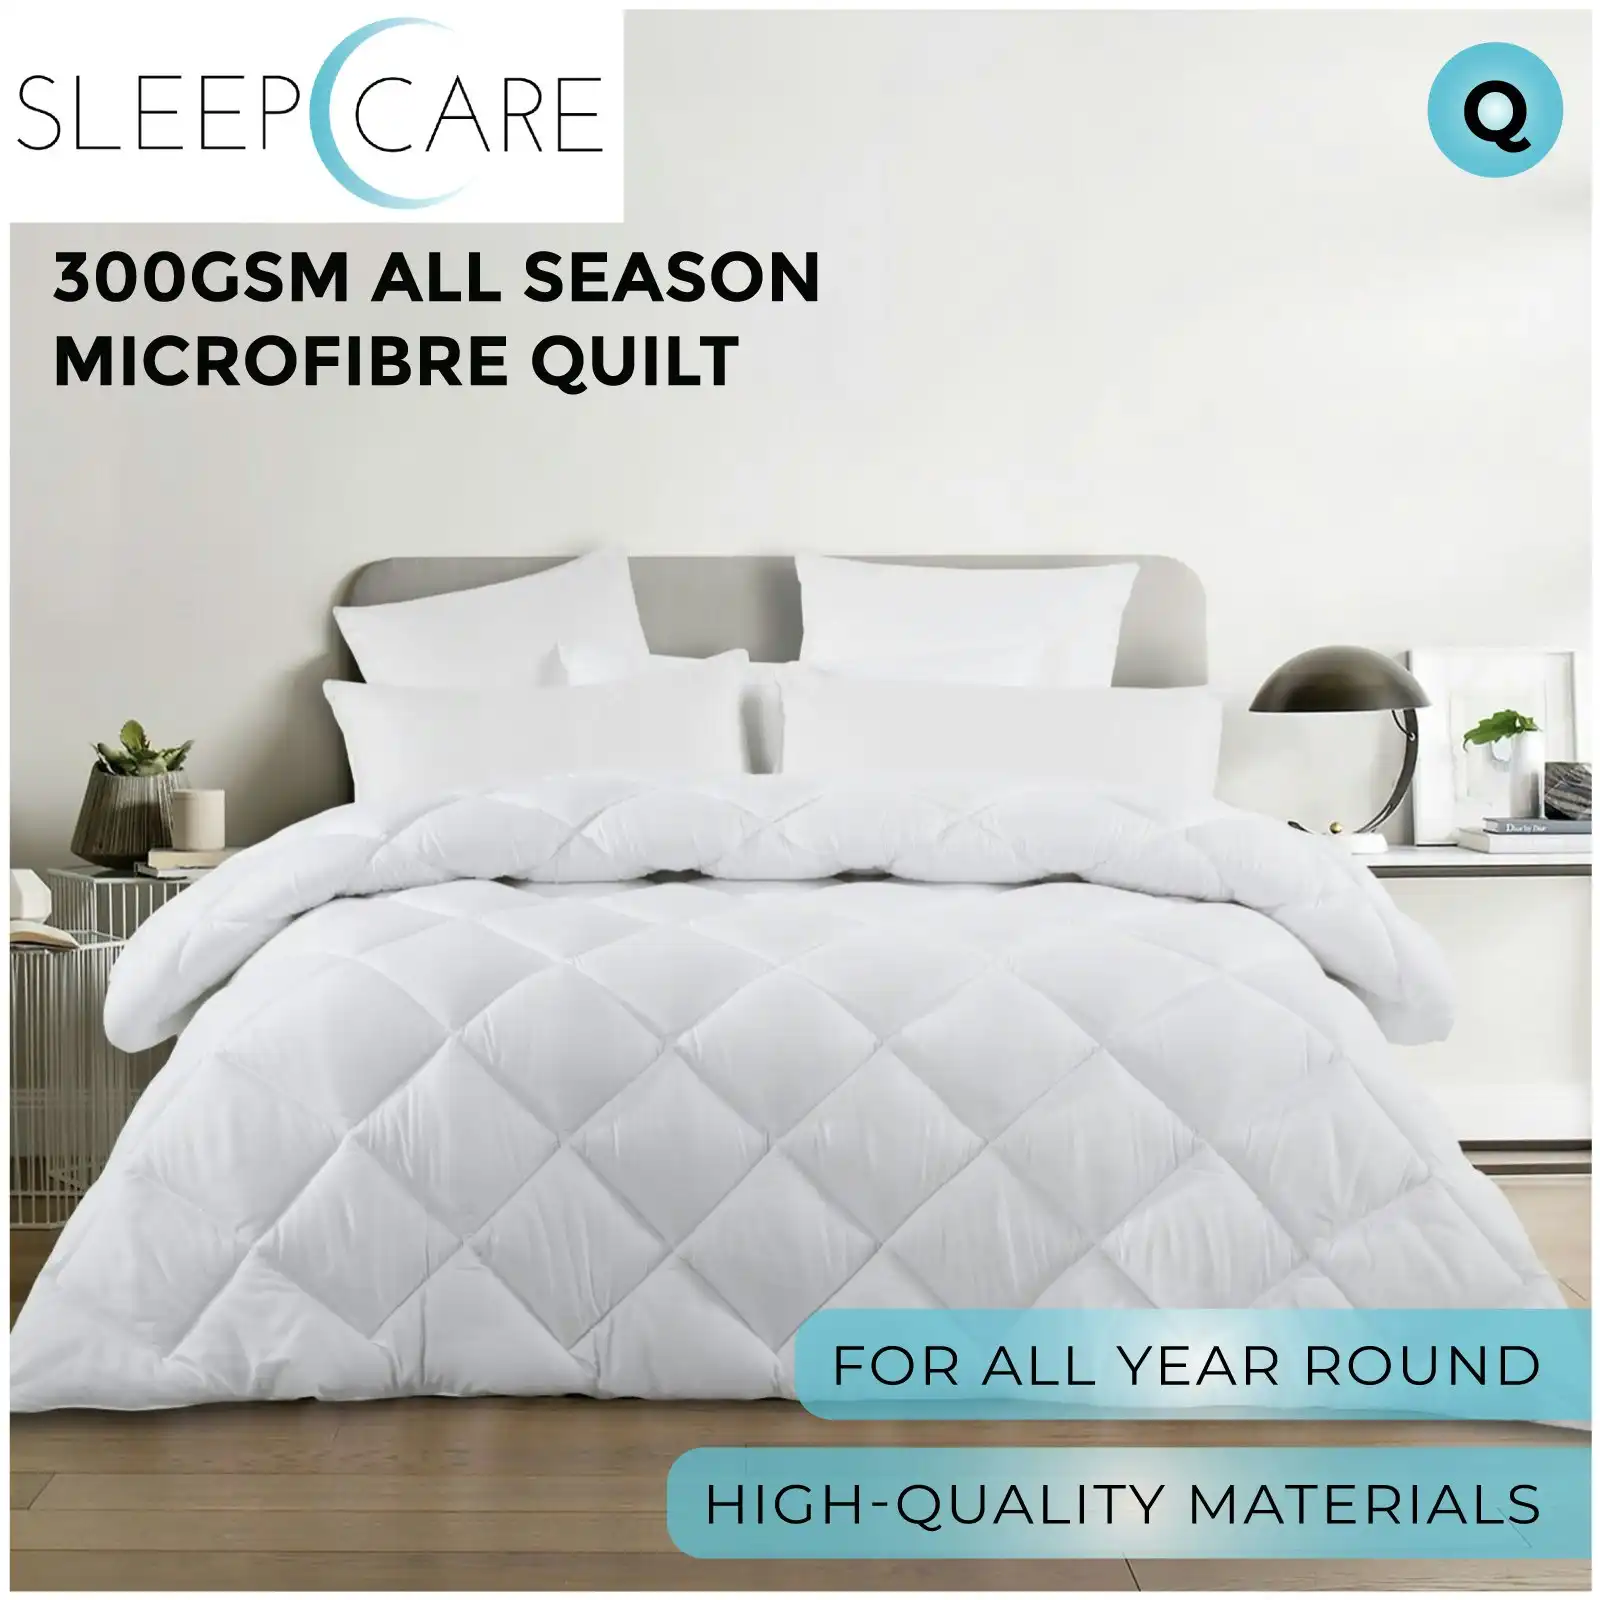 Sleepcare 300GSM All Season Microfibre Quilt Queen Bed